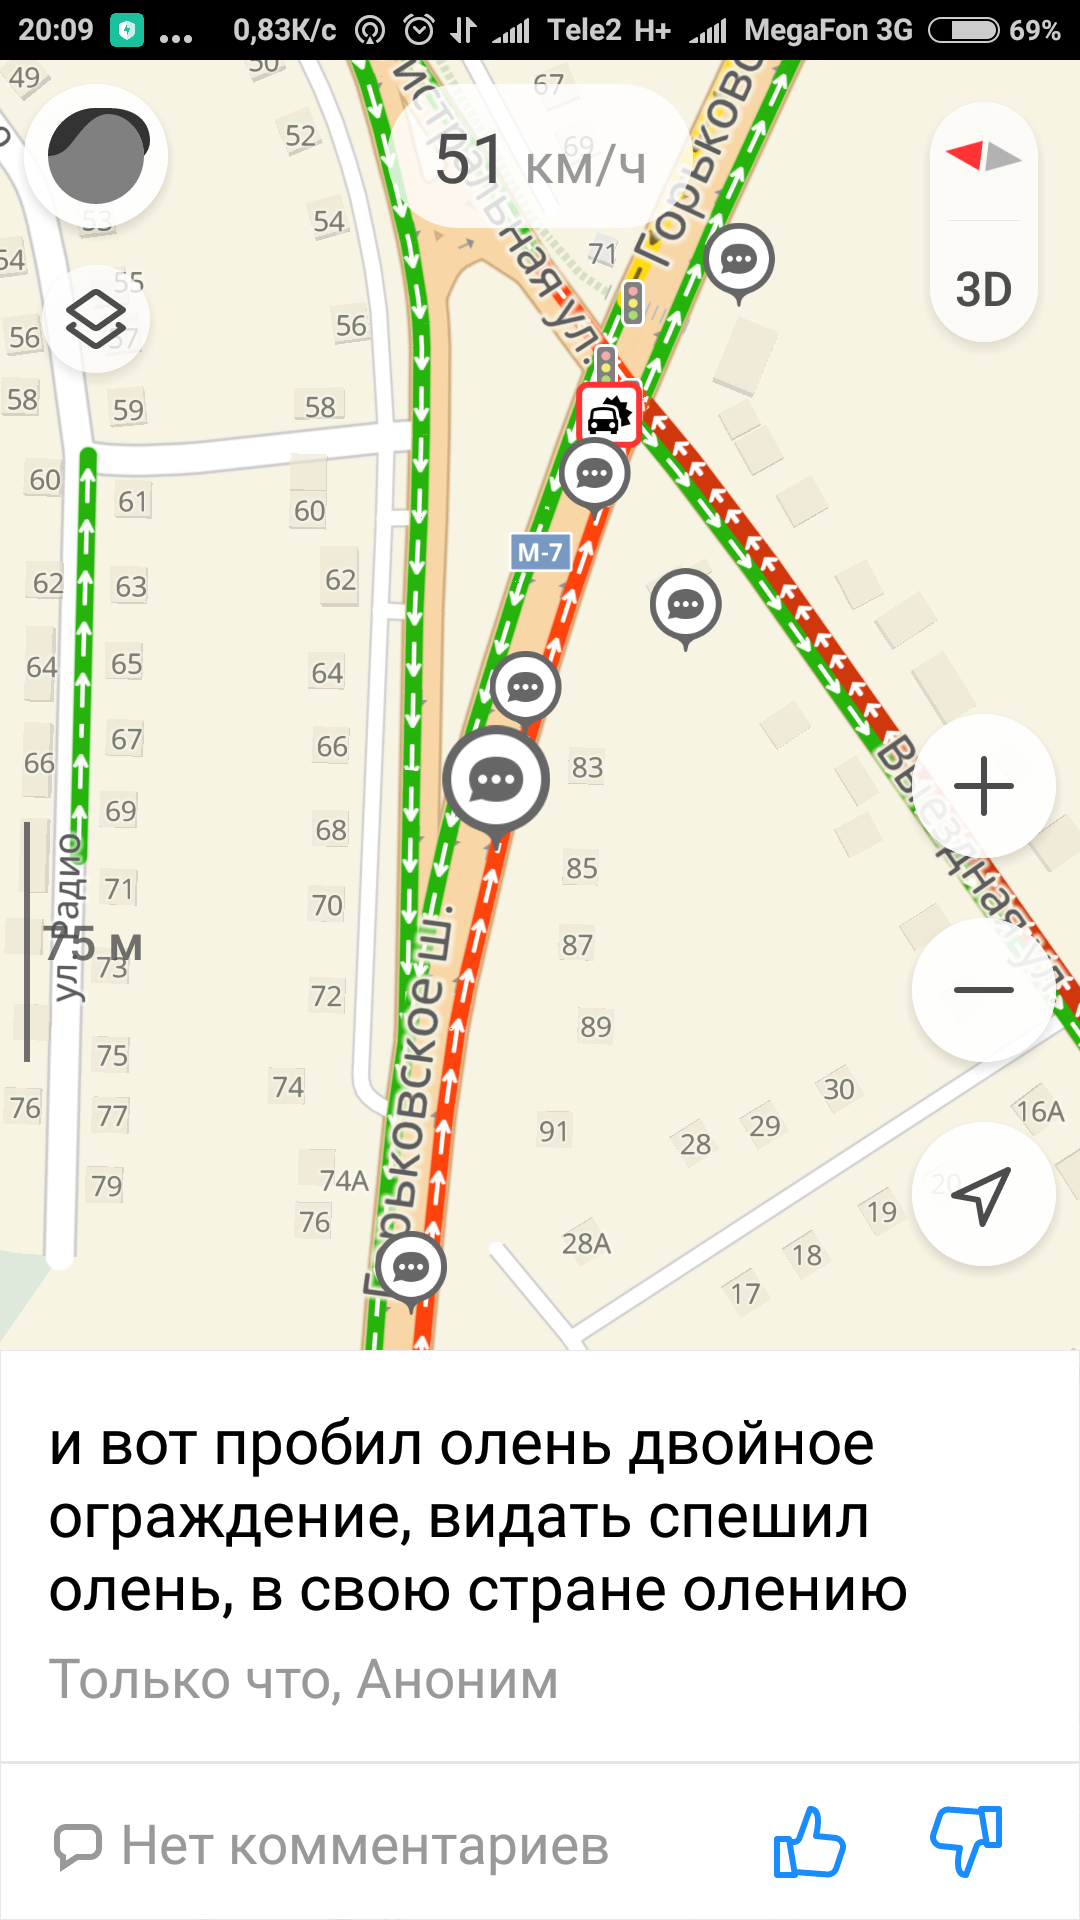 Folk art in a traffic jam on the M7 - My, Humor, Road accident, Poetry, Poems-Patties, Longpost, Screenshot, Yandex Traffic